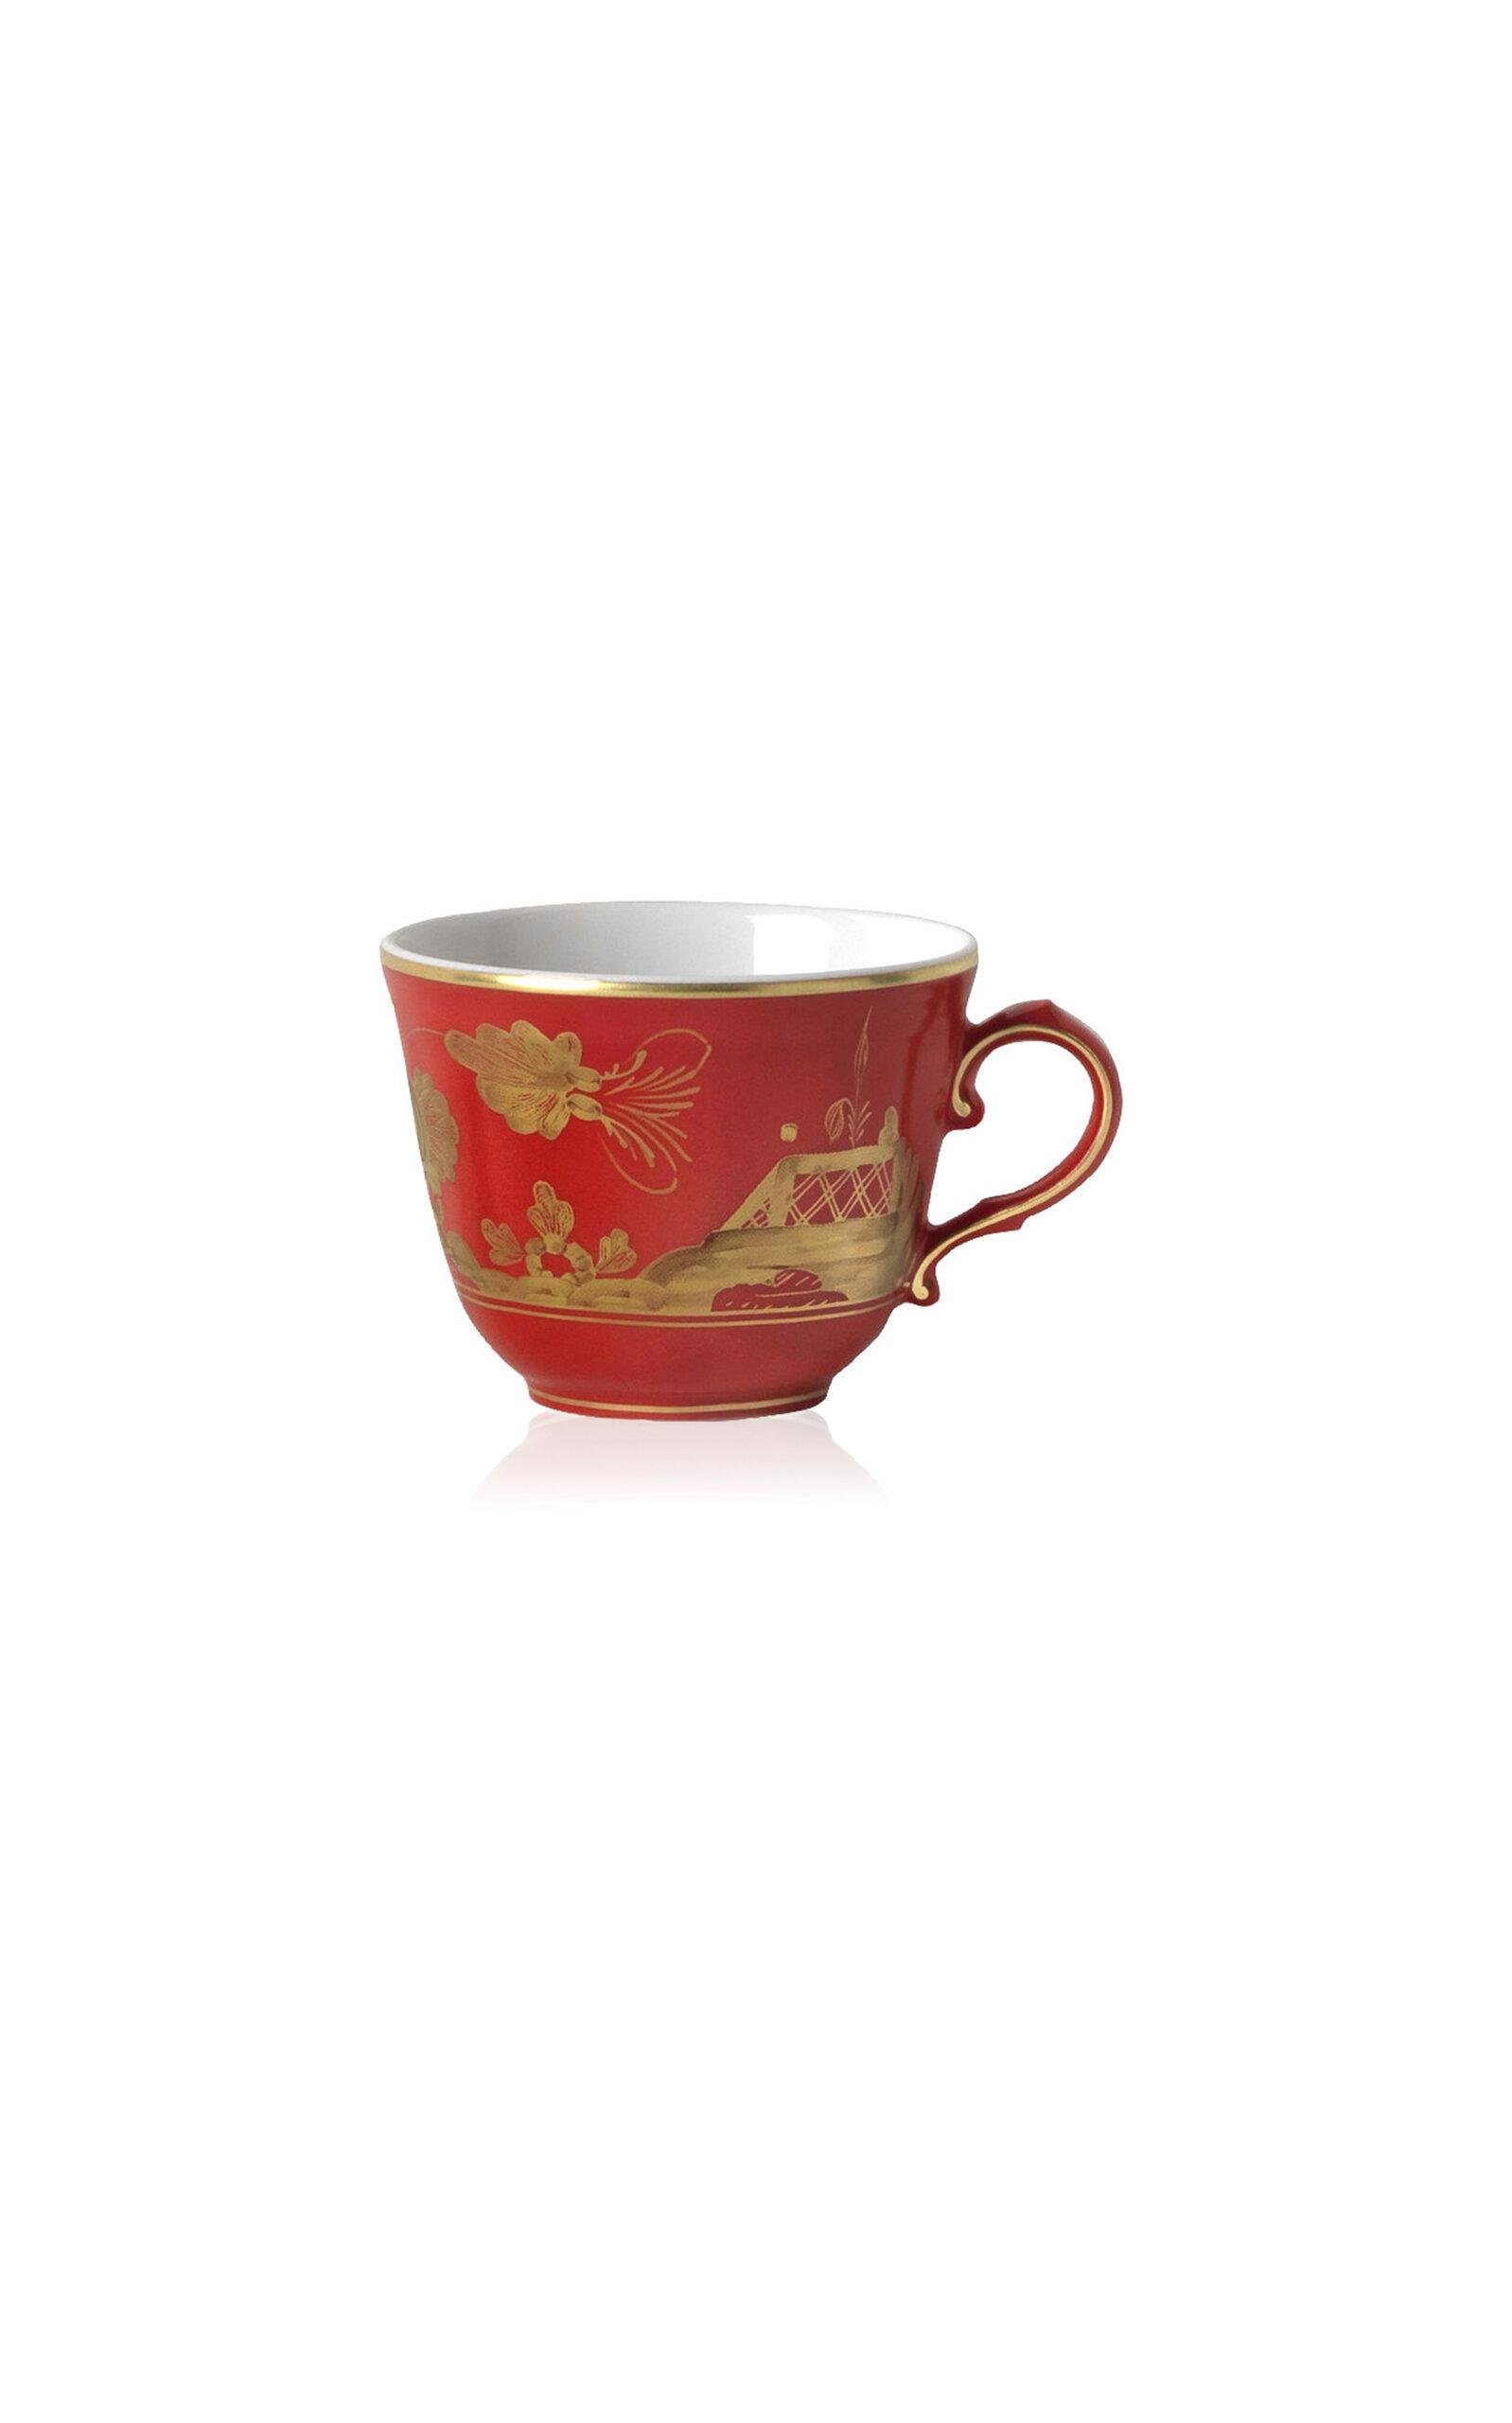 Ginori 1735 - Antico Doccia Porcelain Coffee Cup - Red - Moda Operandi by GINORI 1735